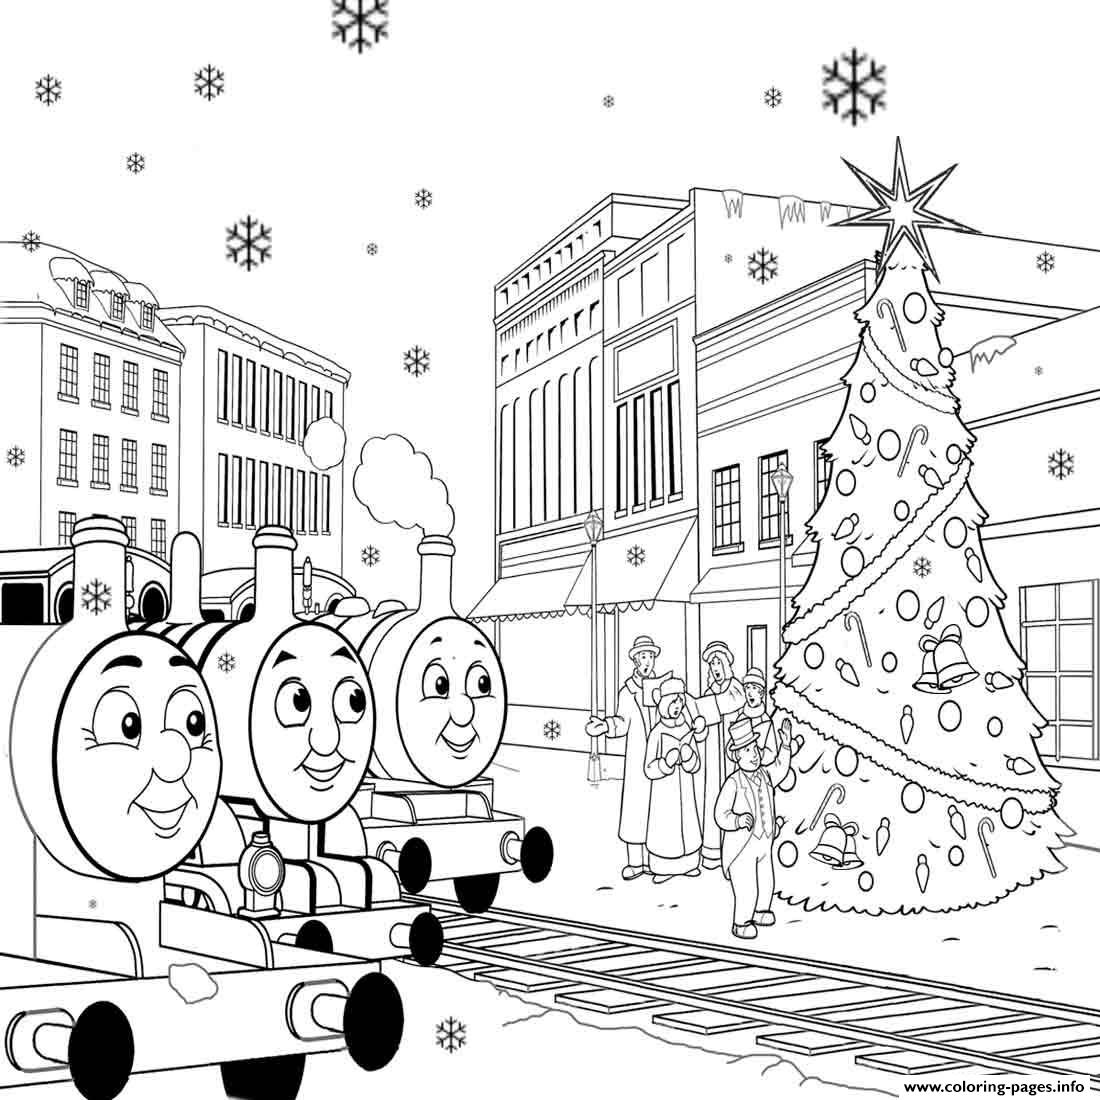 Free Printable Thomas The Train S For Kids Christmasa2de coloring